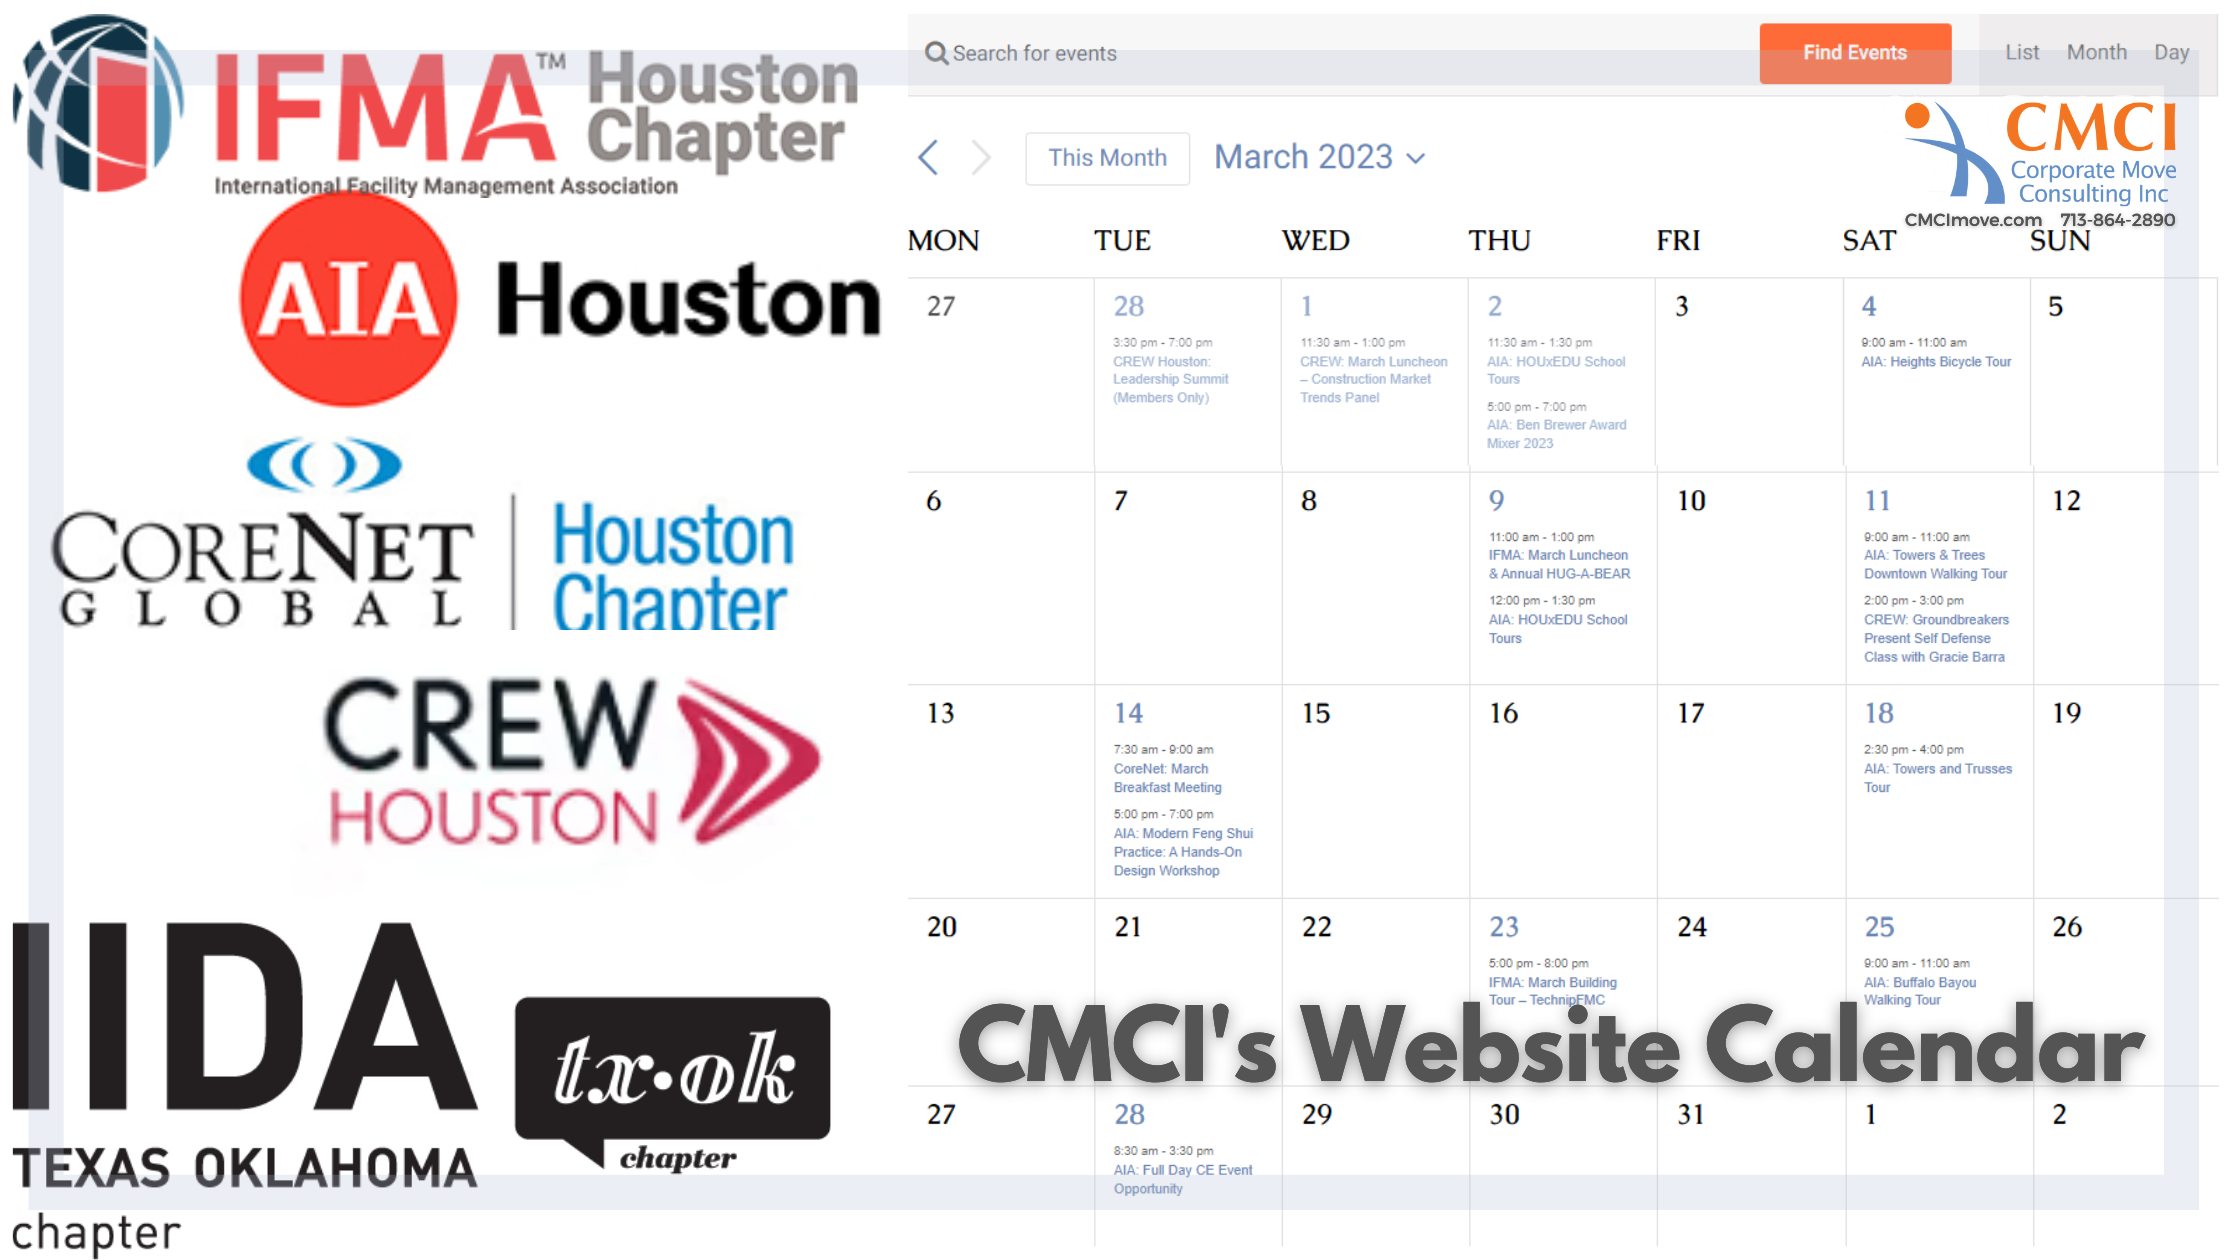 Corporate Move Consulting Inc. Website Calendar